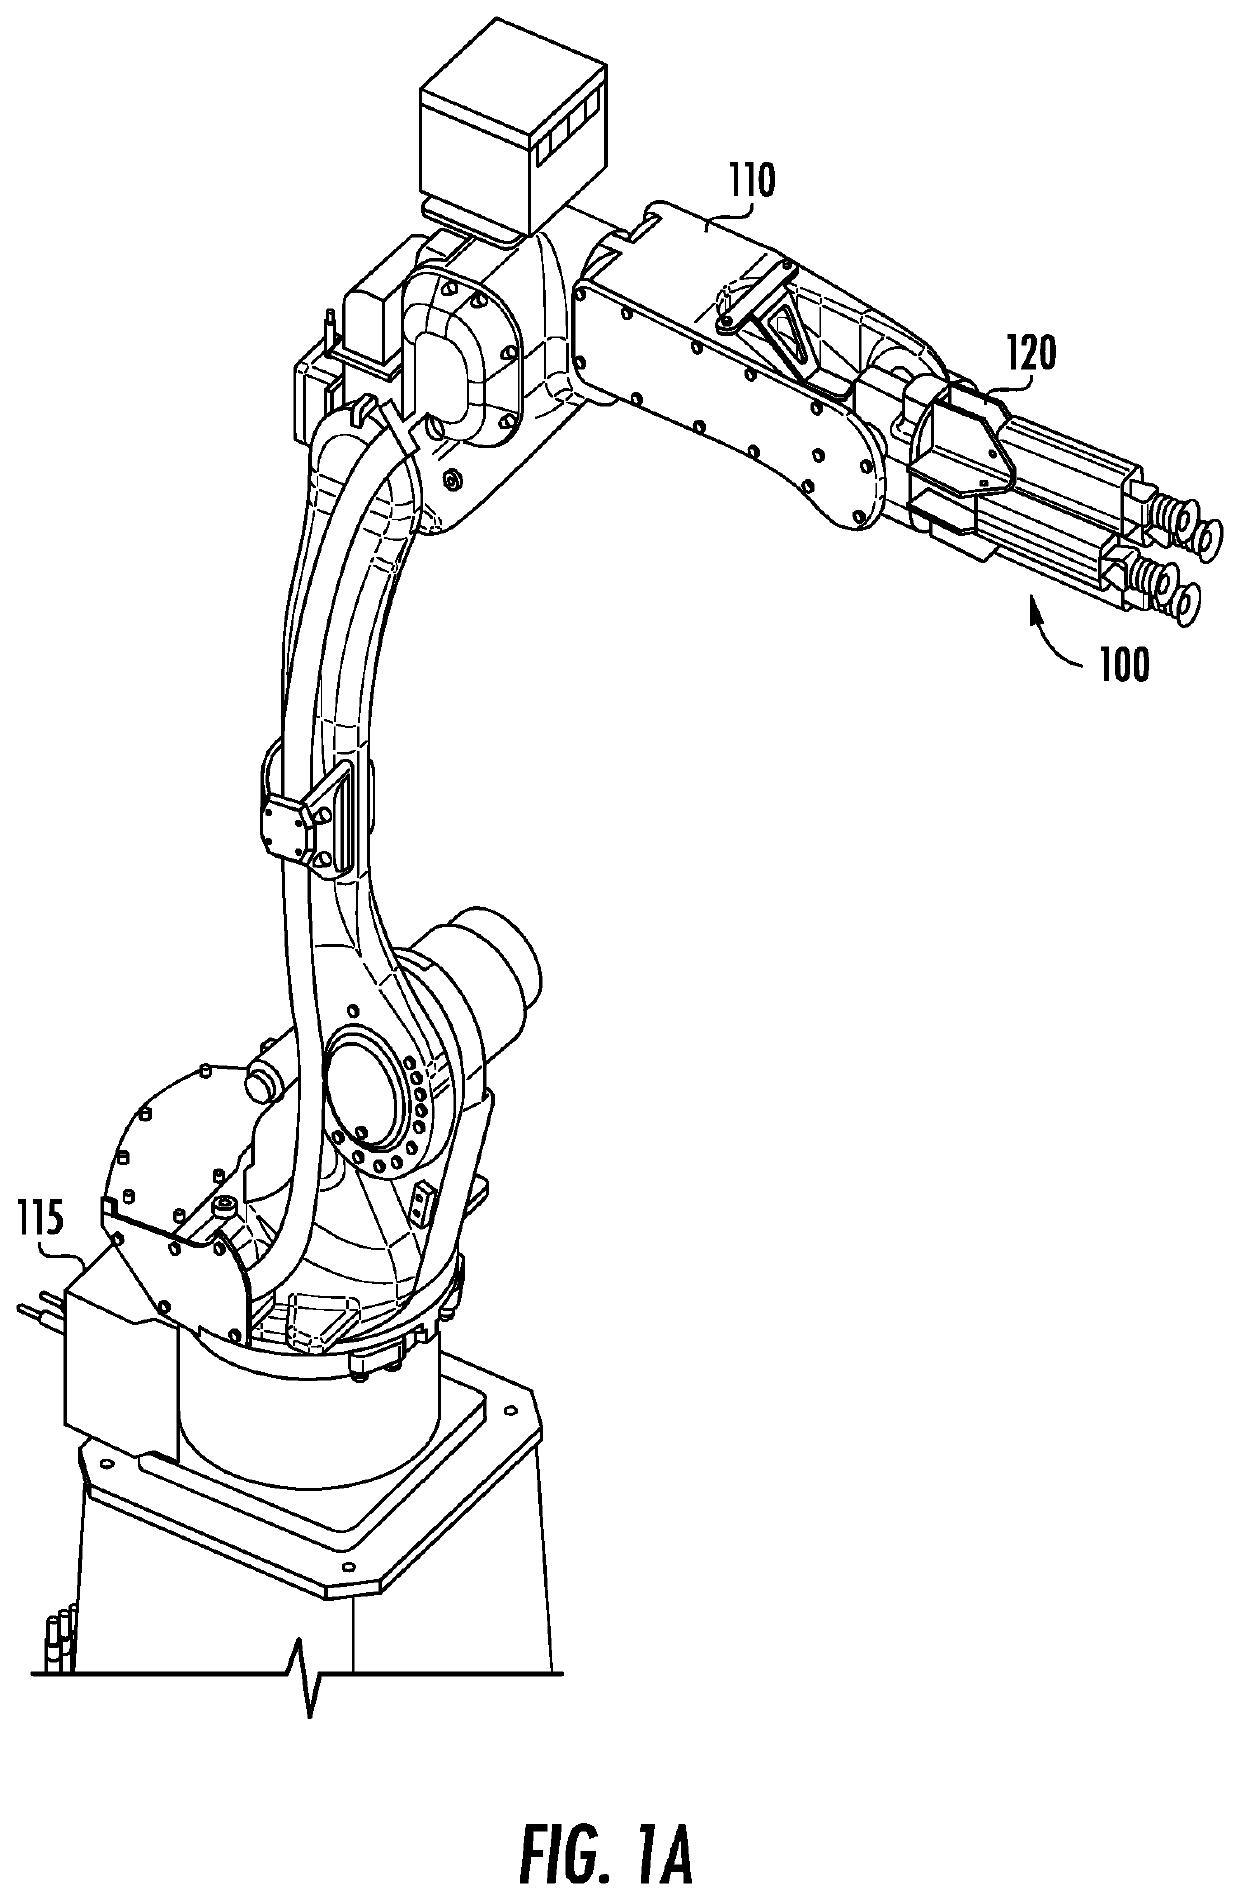 Object gripping mechanism